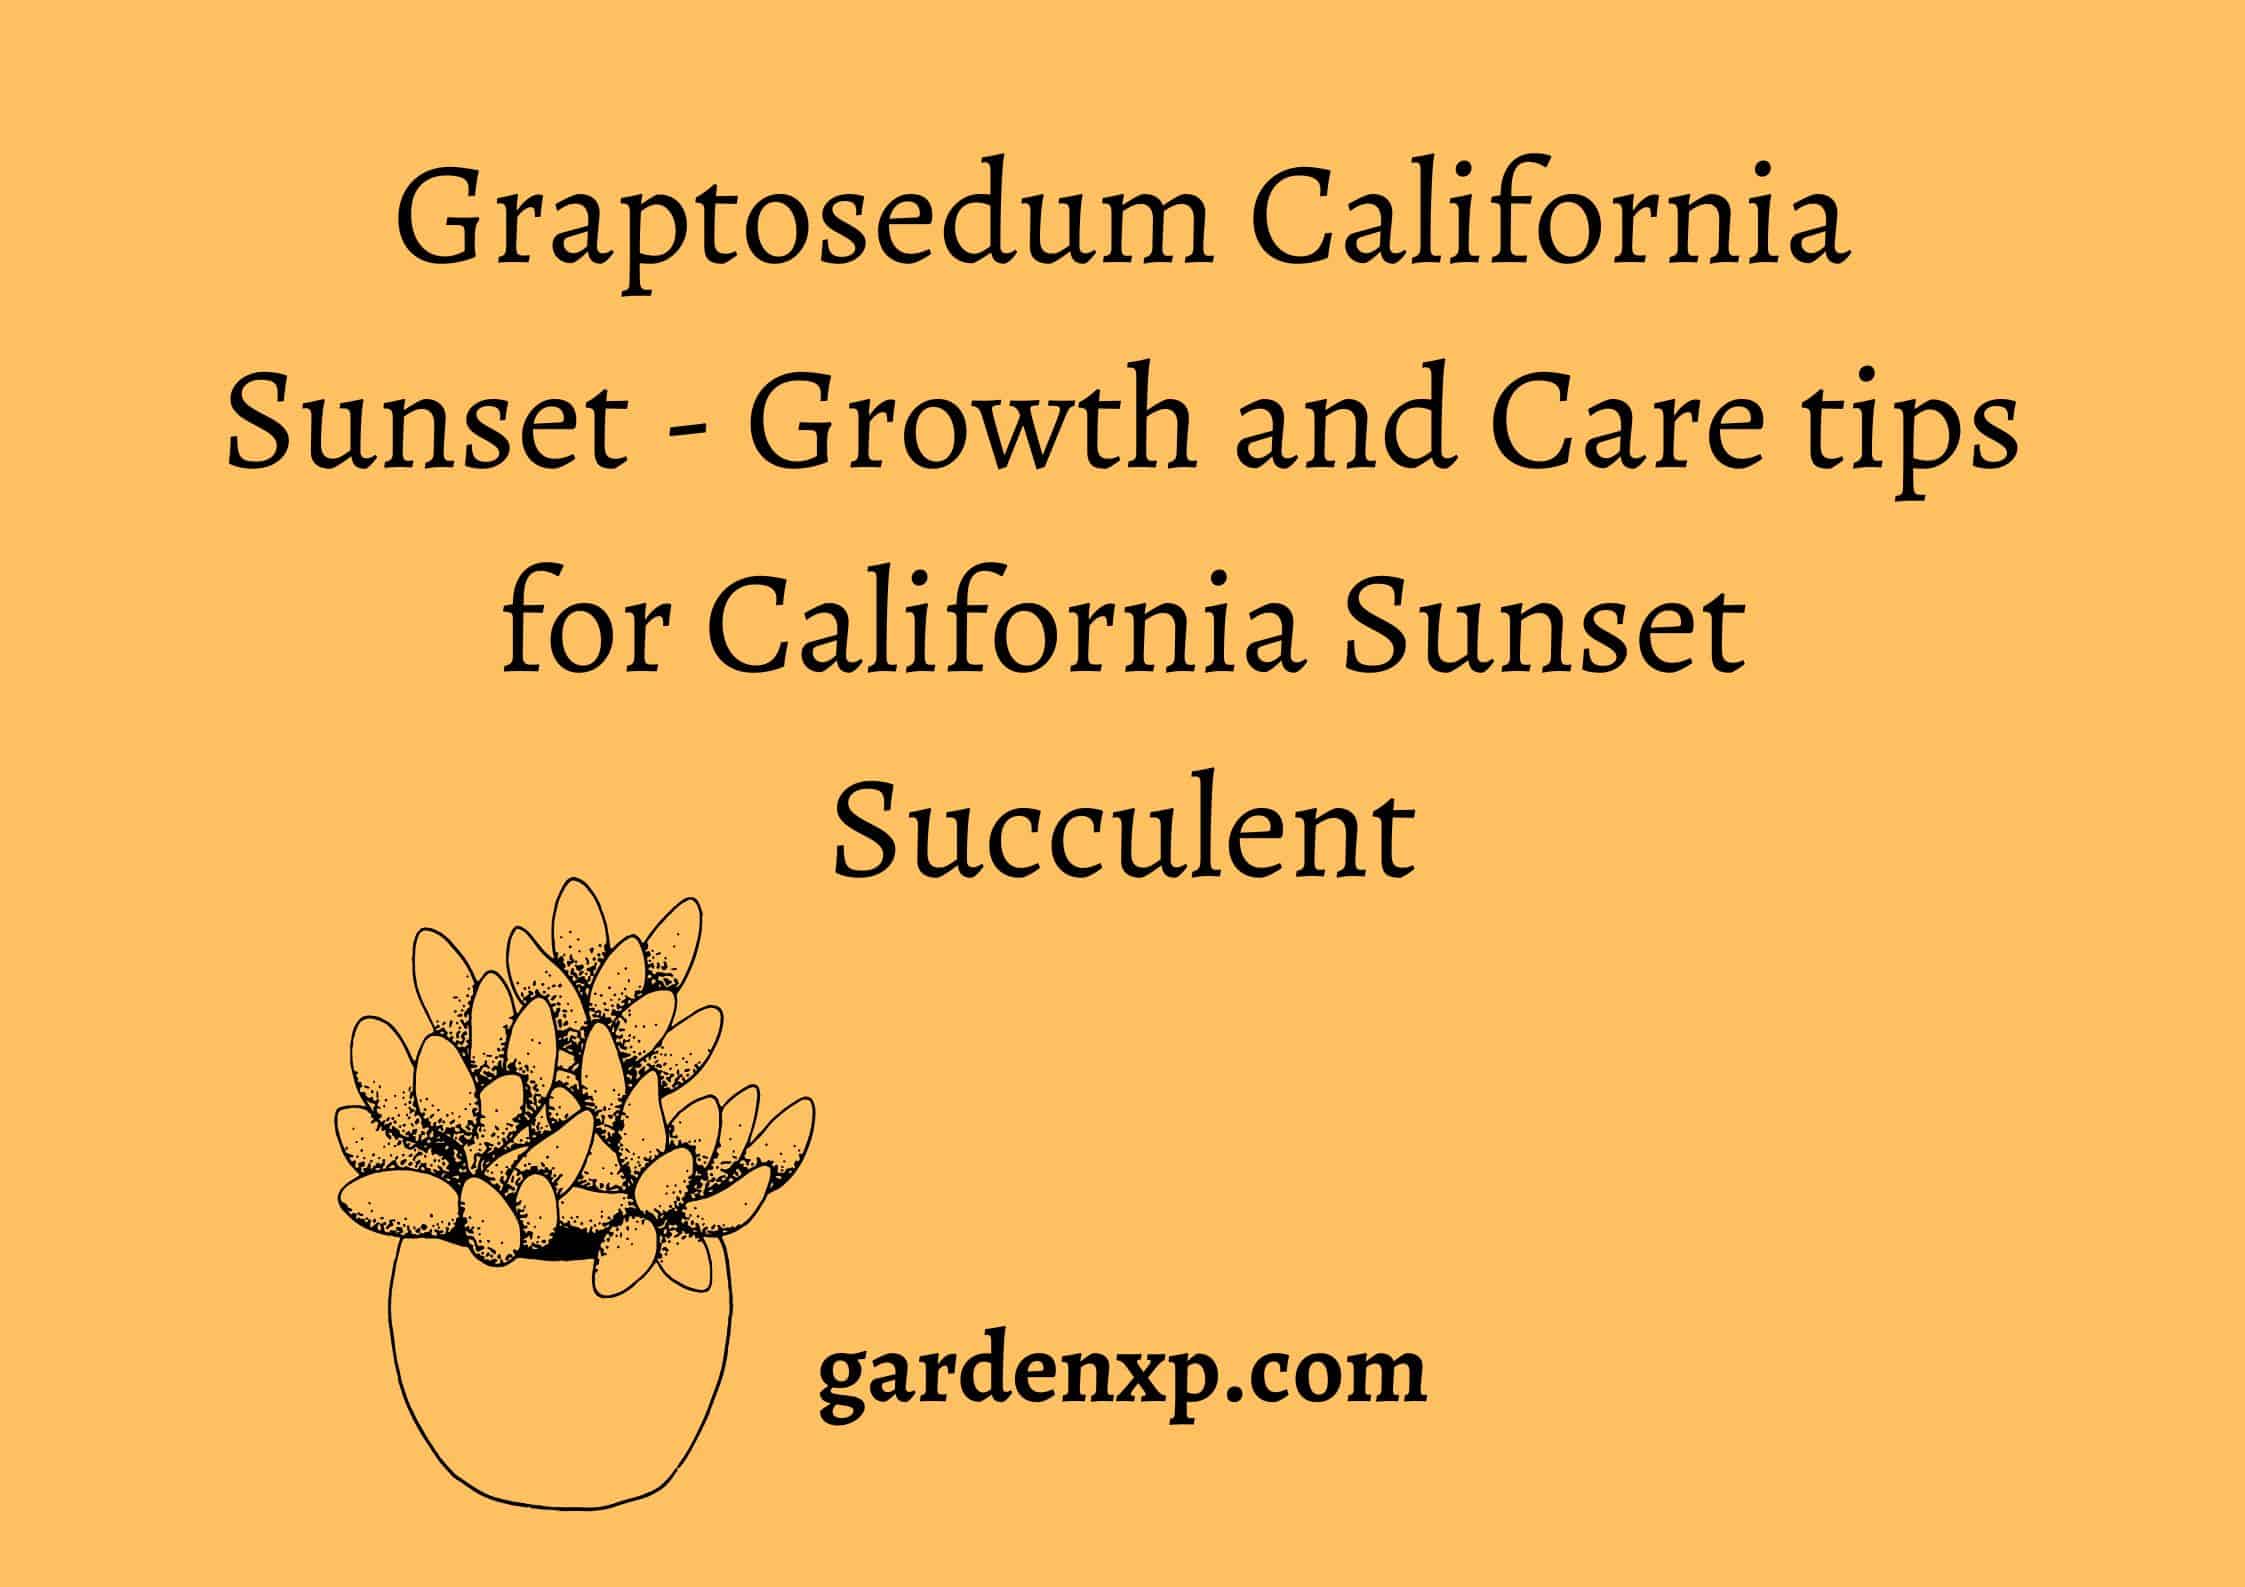 Graptosedum California Sunset - Growth and Care tips for California Sunset Succulent